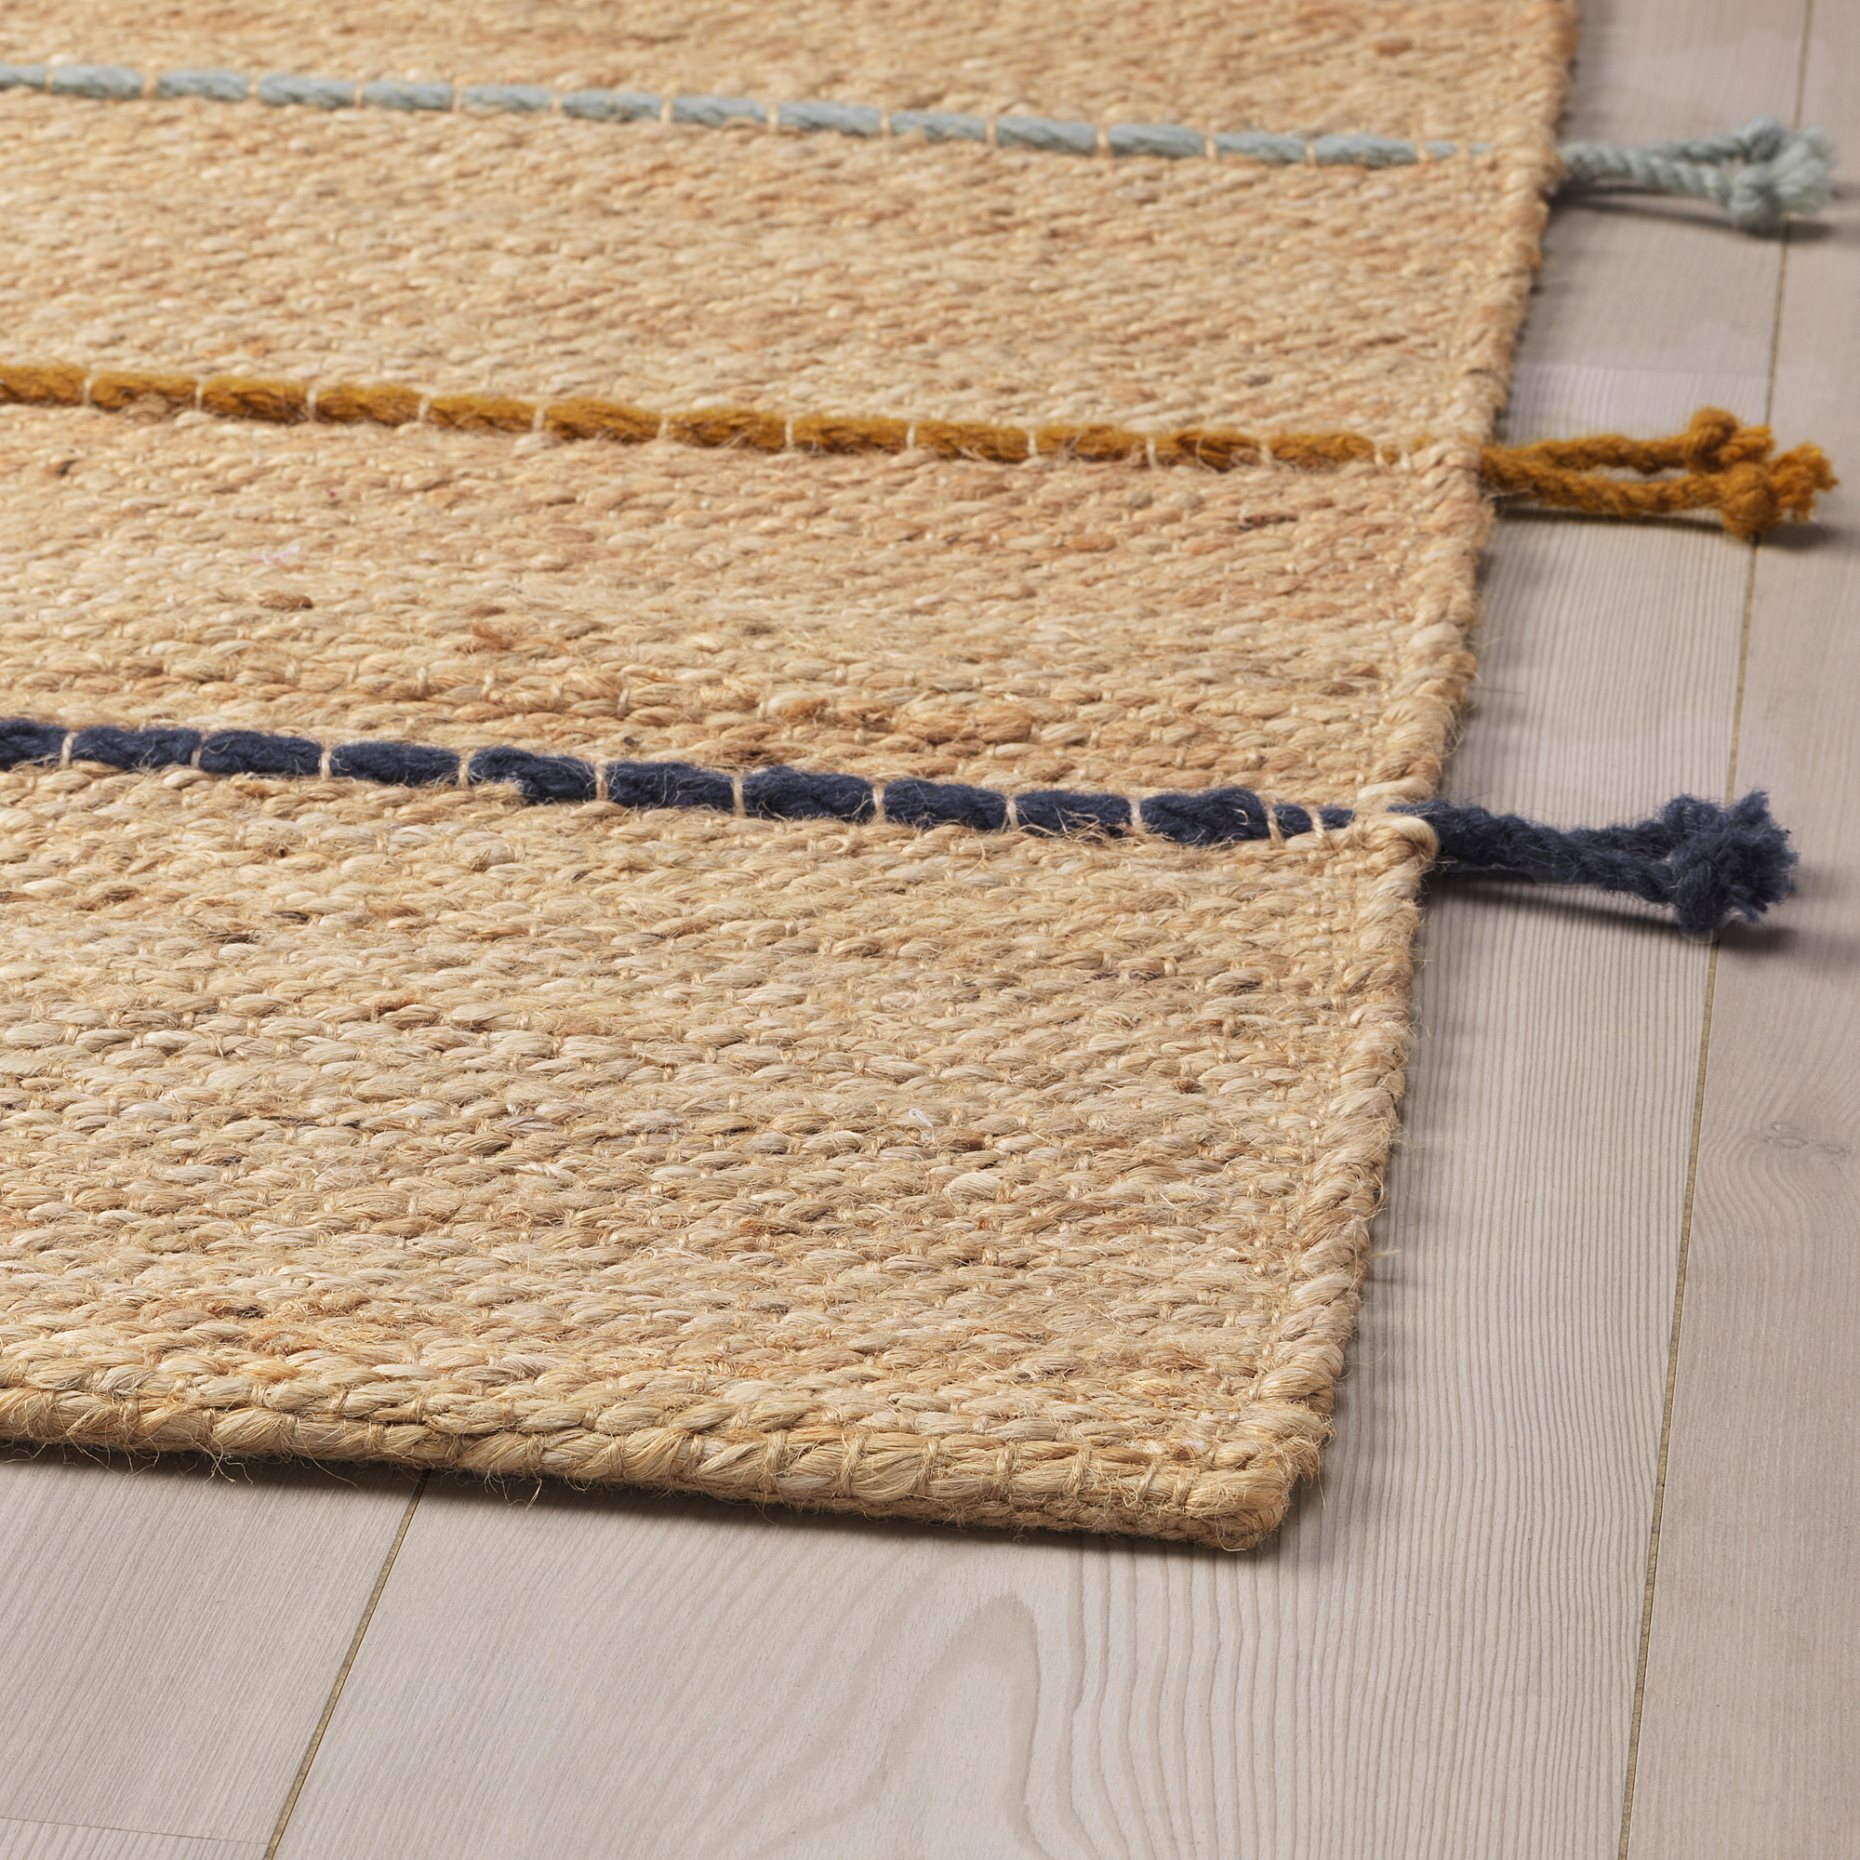 RAKLEV, rug flatwoven/handmade, 70x160 cm, 804.080.24